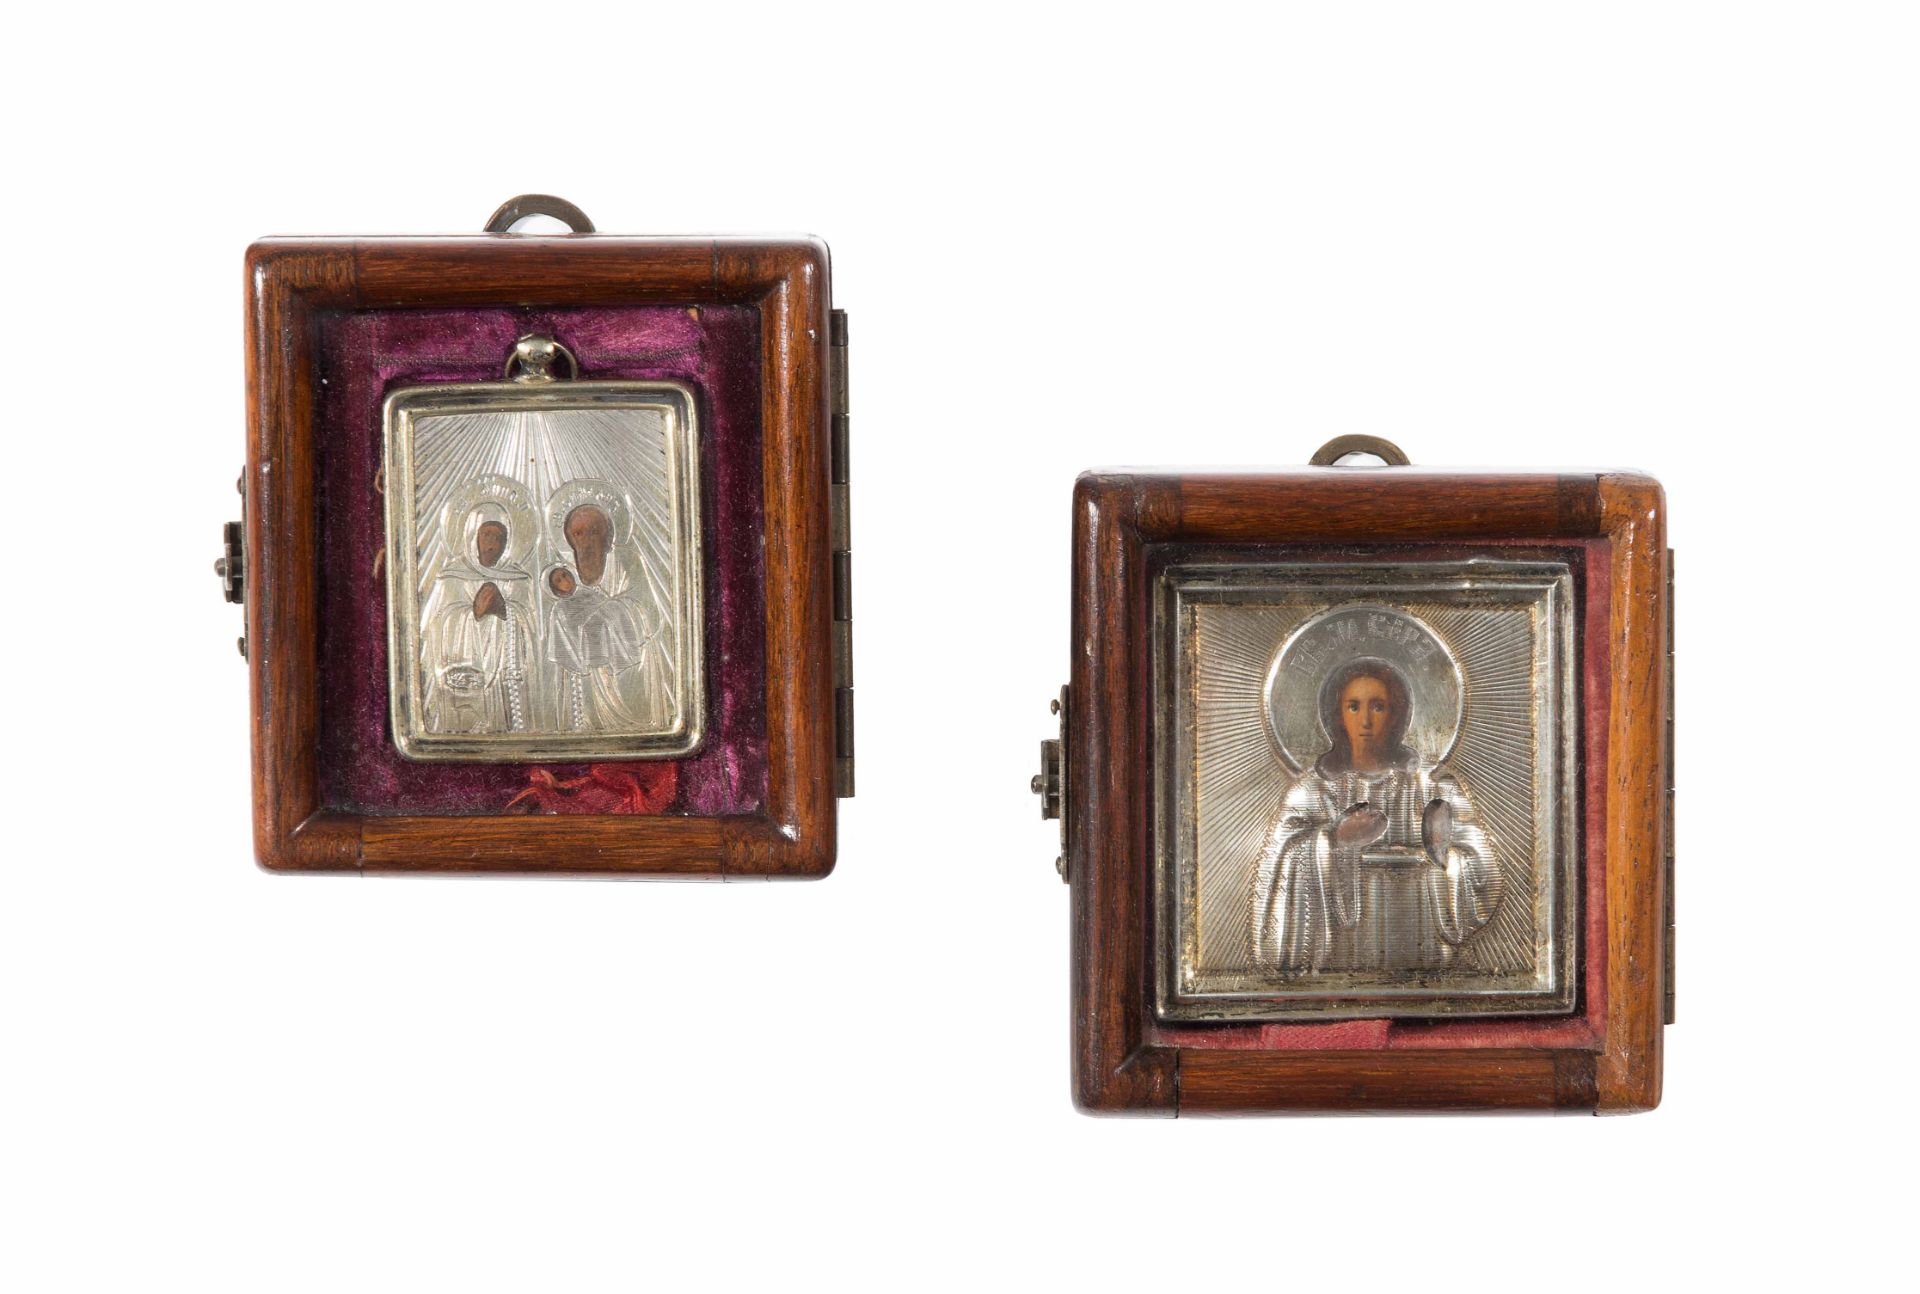 Lot: 2 Miniatur-Ikonen mit Silberoklad in Kiyot